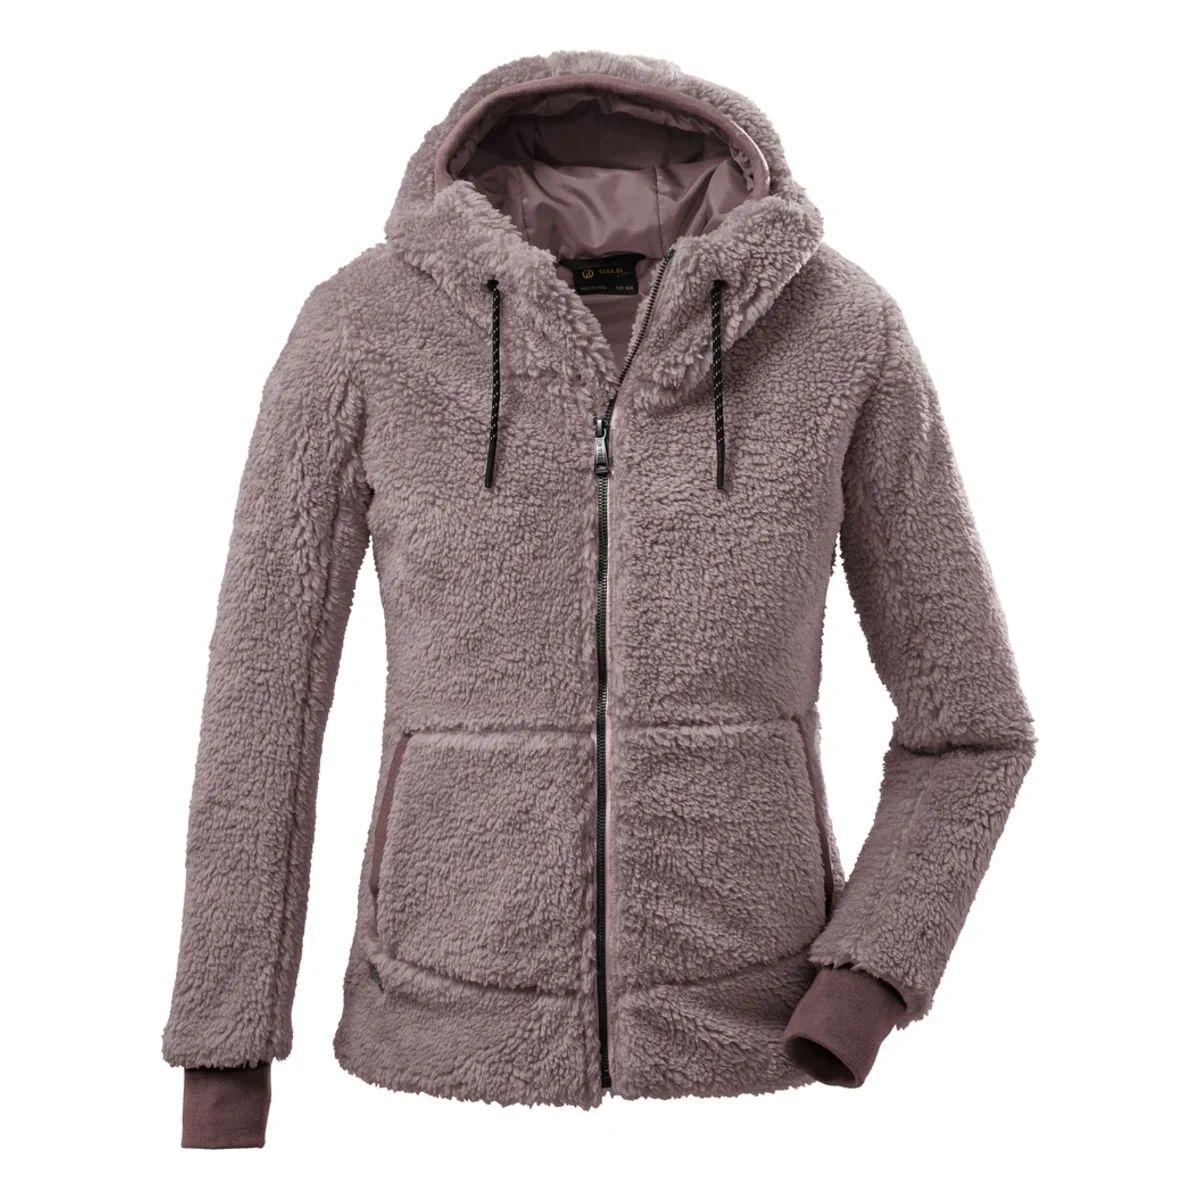 KILLTEC Ws 39288 Hooded Fleece Jacket